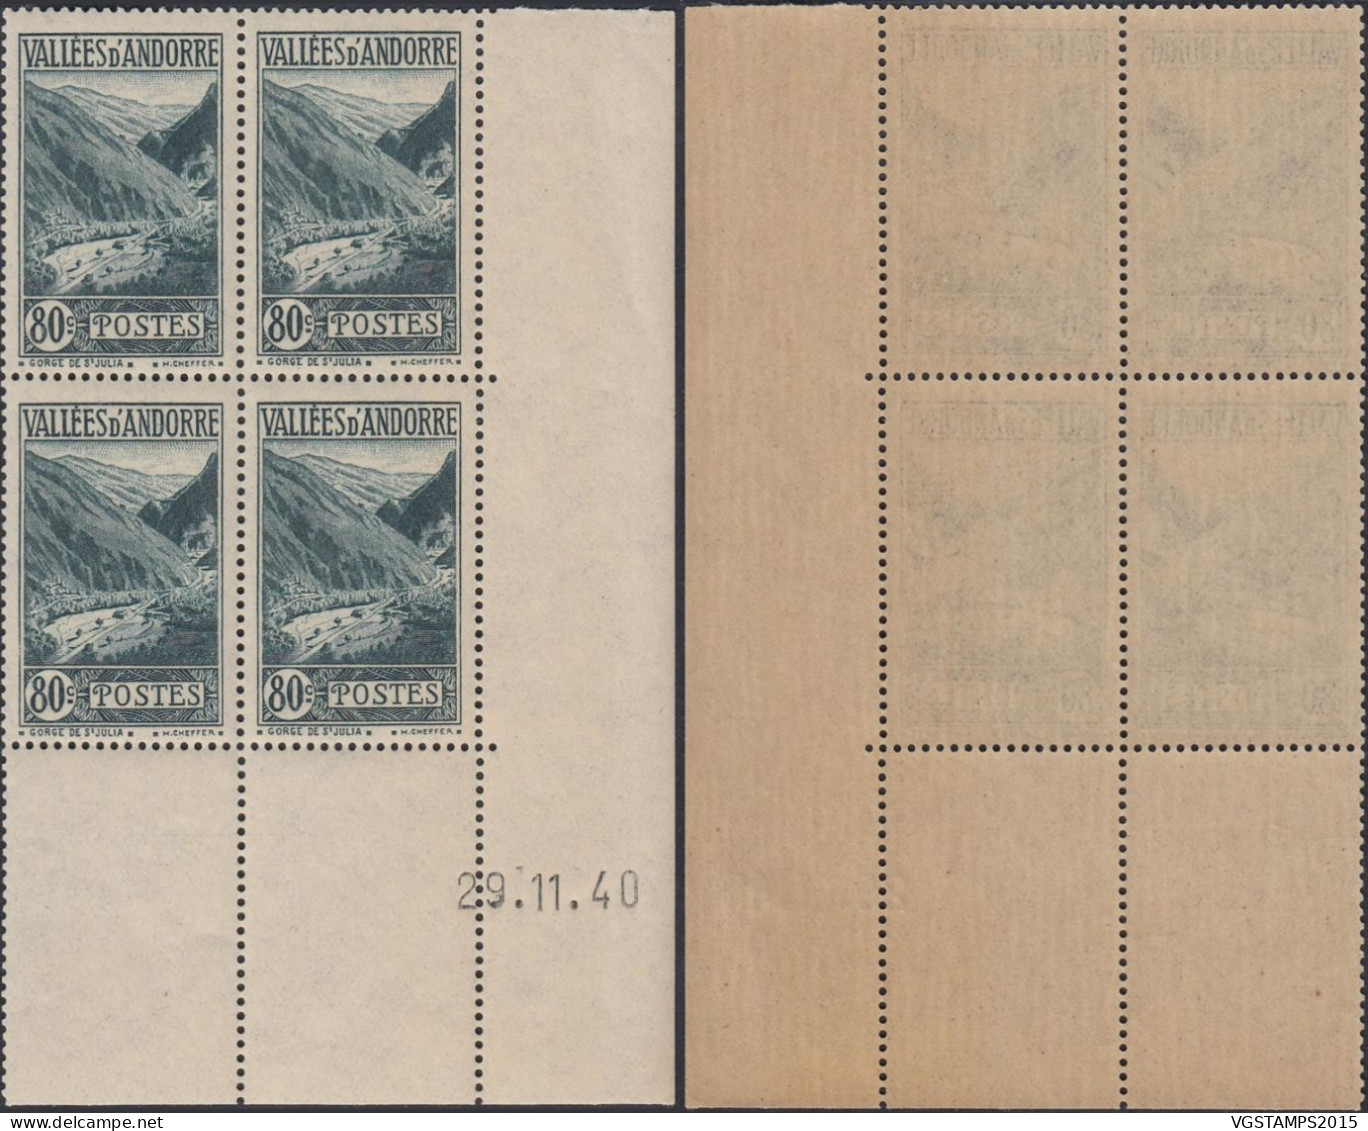 Andorre 1941 - Andorre Française - Timbres Neufs. Yvert Nr.: 72. Michel Nr.: 77. Coin Daté: 29/11/40.... (EB) AR-02068 - Ungebraucht